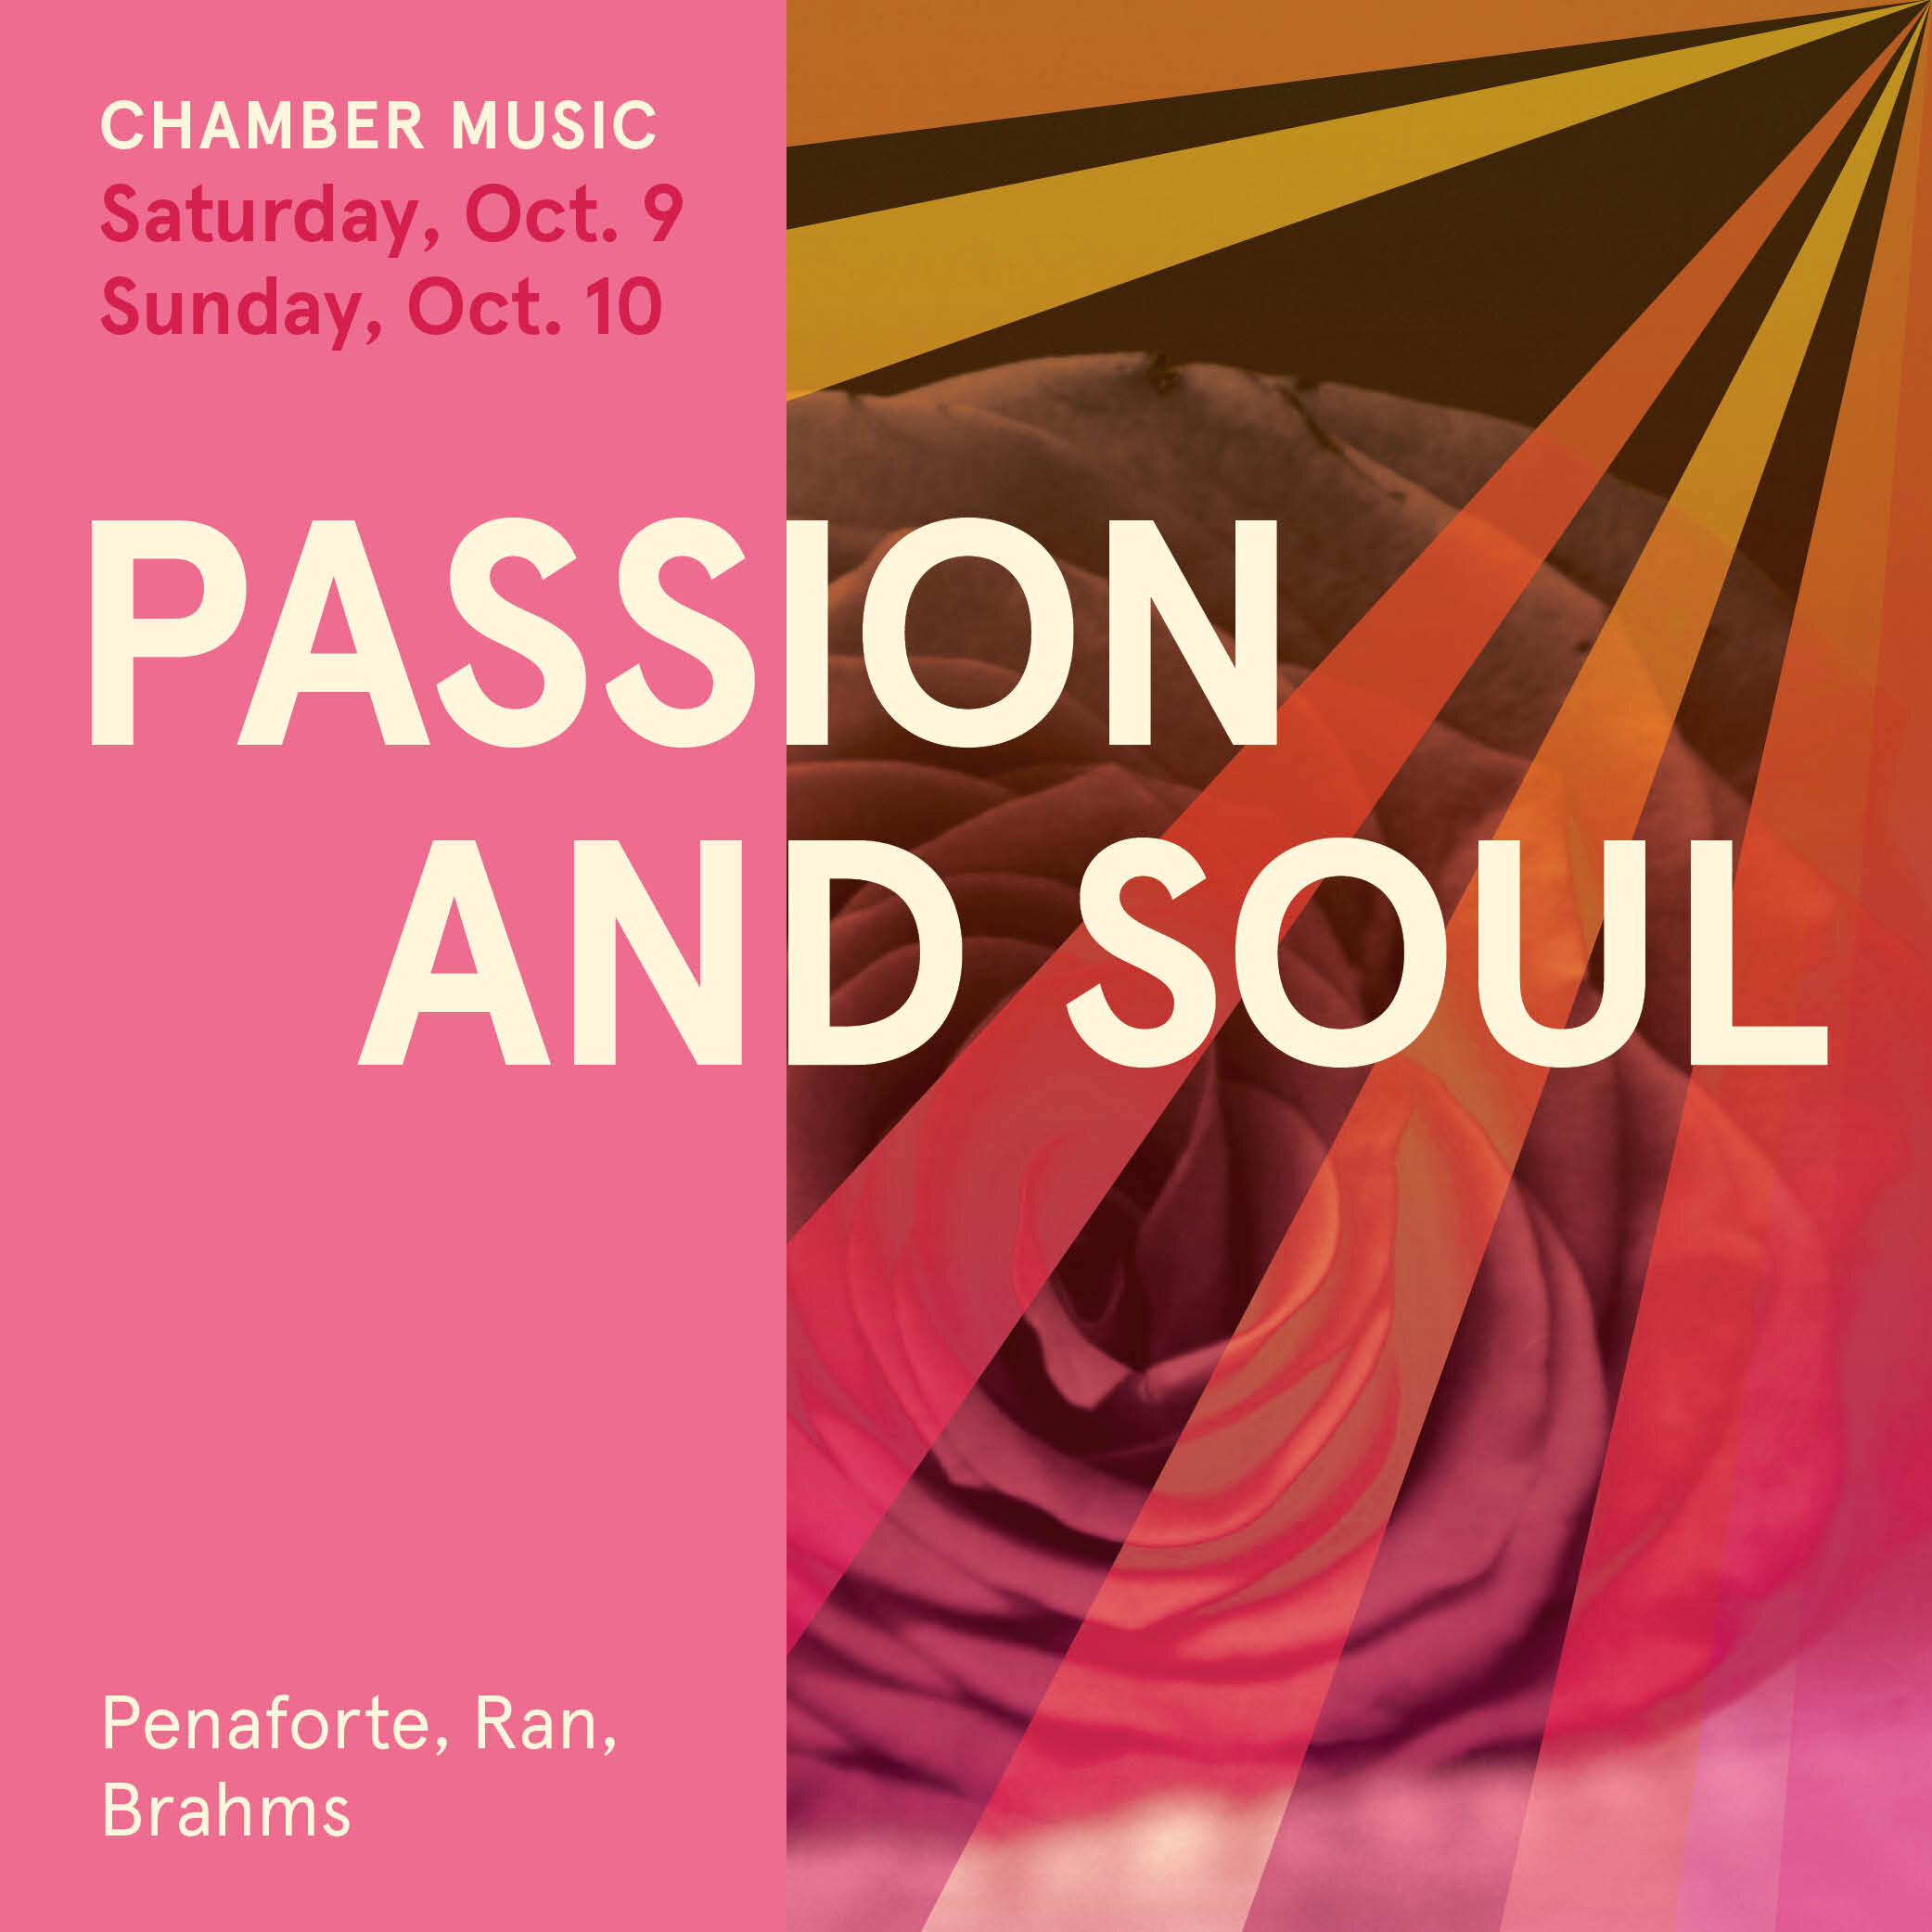 Passion and Soul Digital Program Book